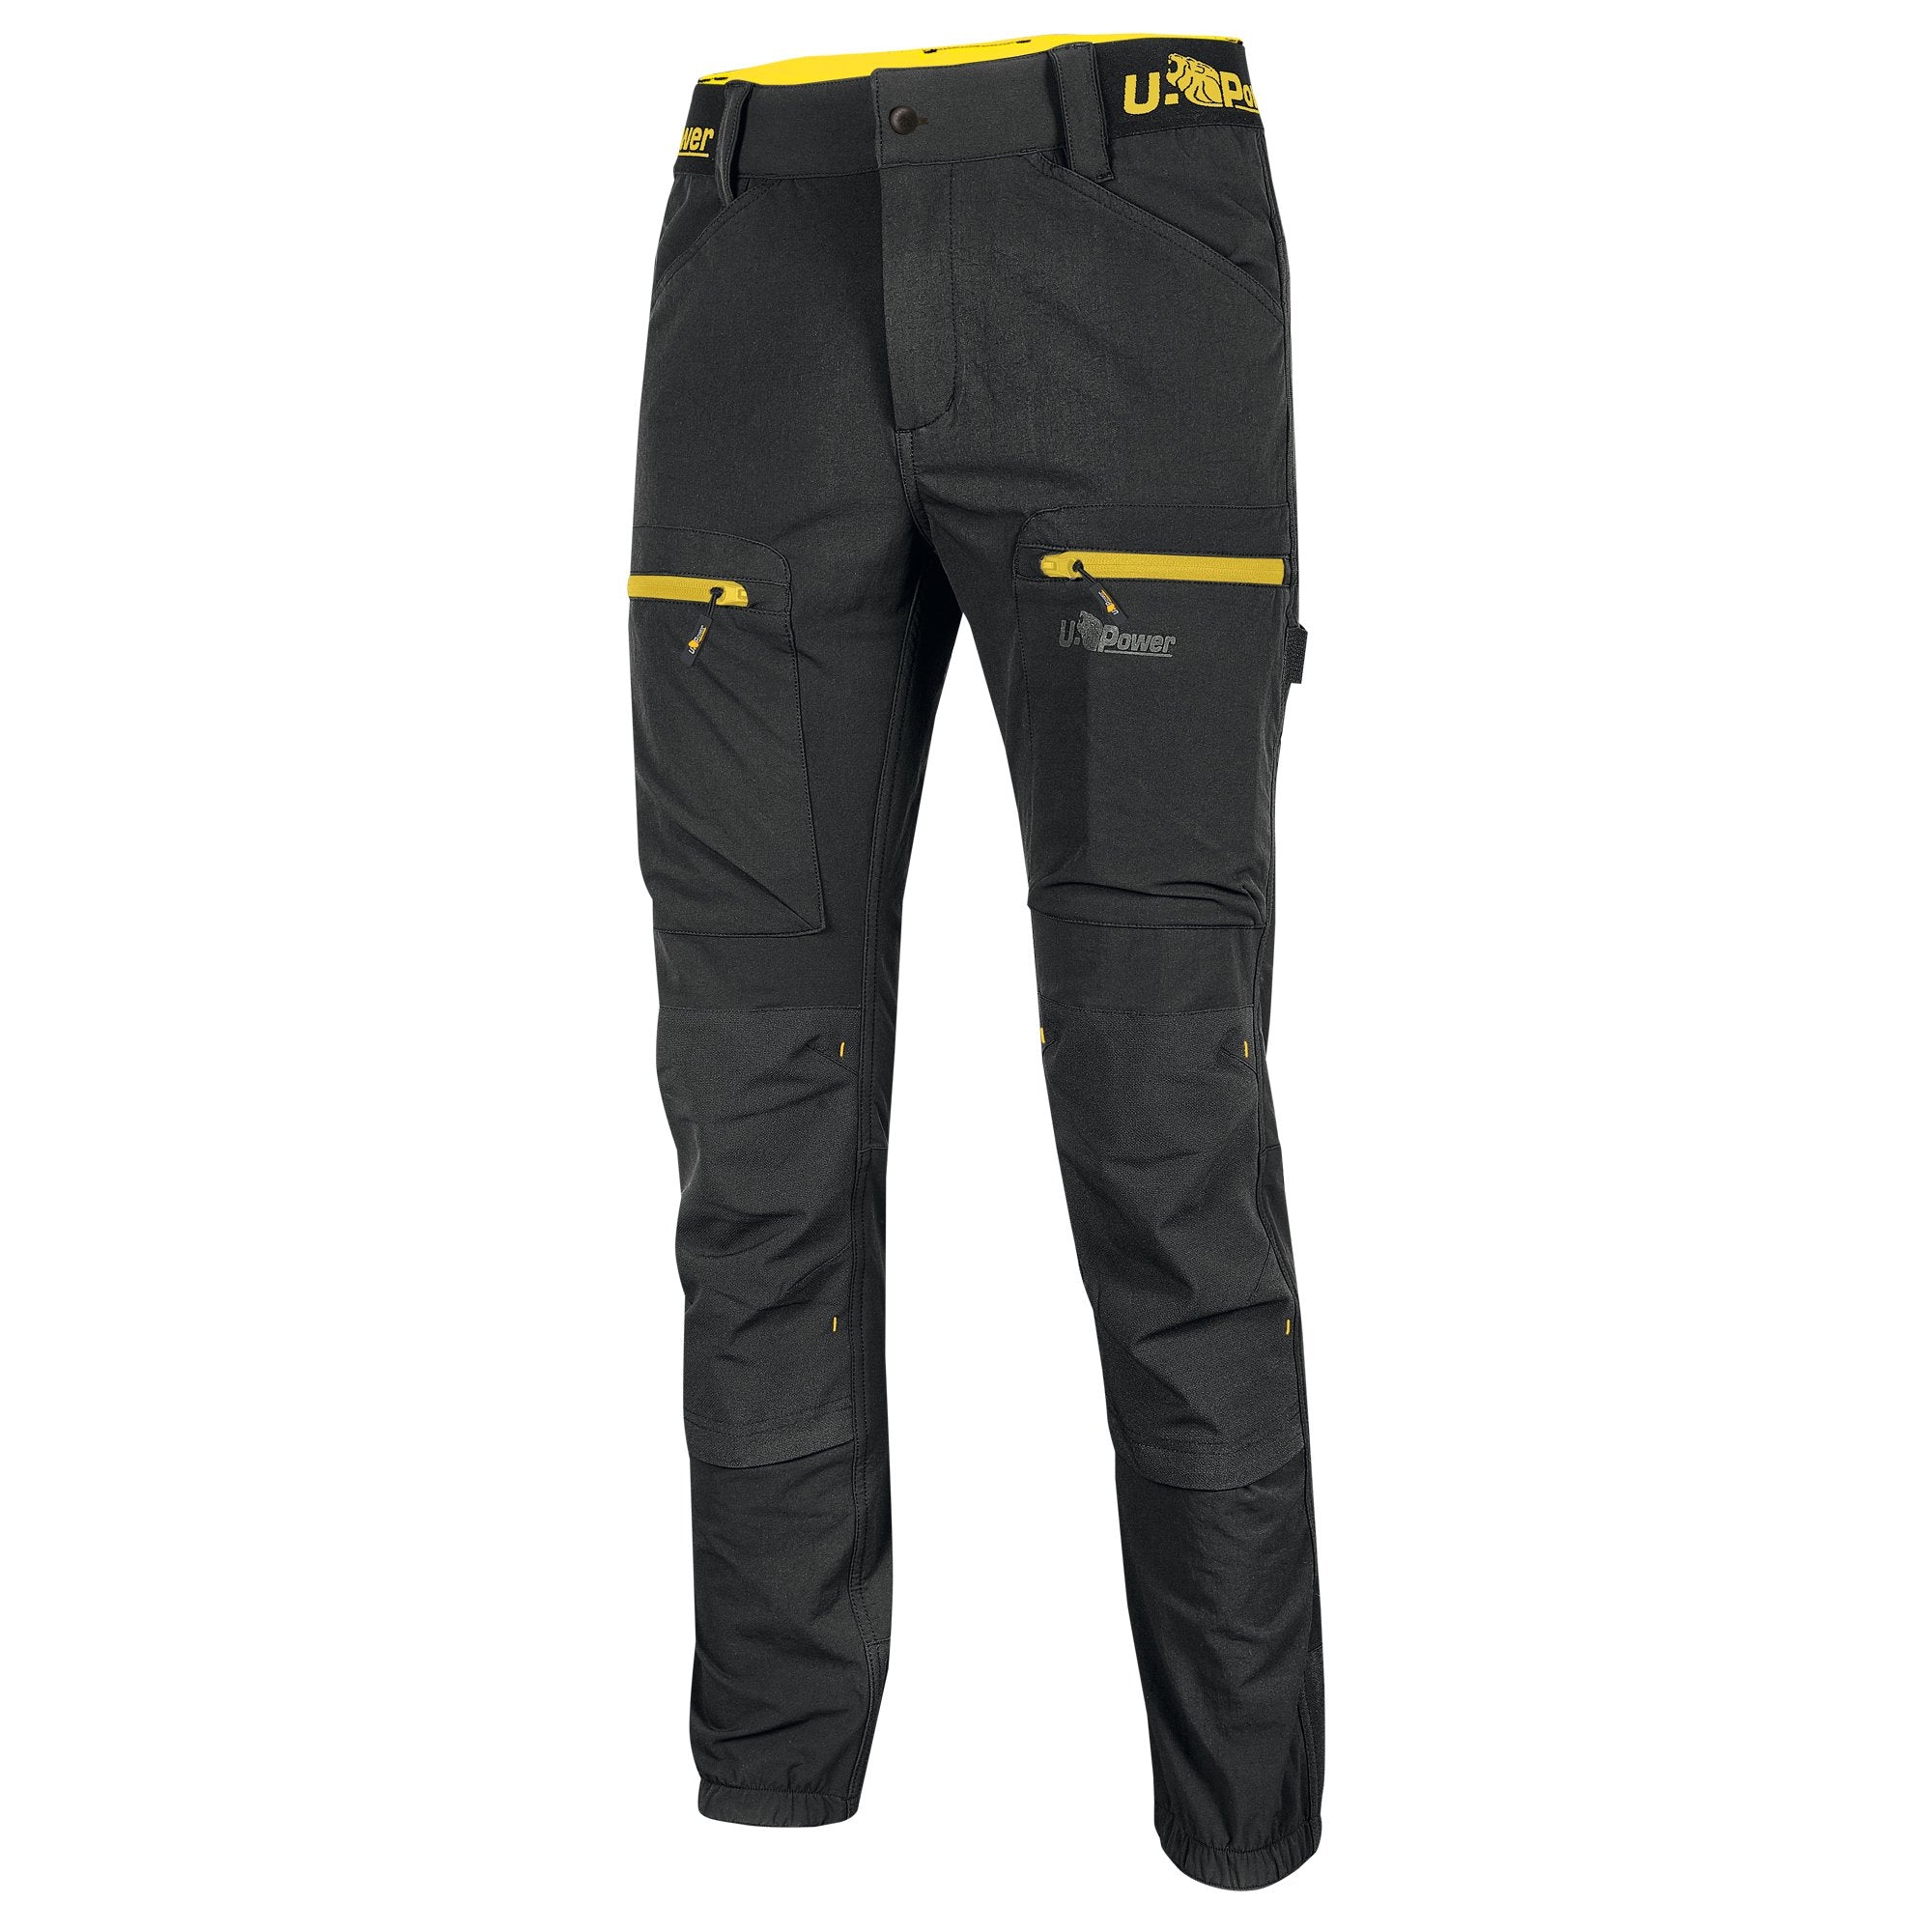 u-power-pantalone-horizon-tg-m-nero-giallo